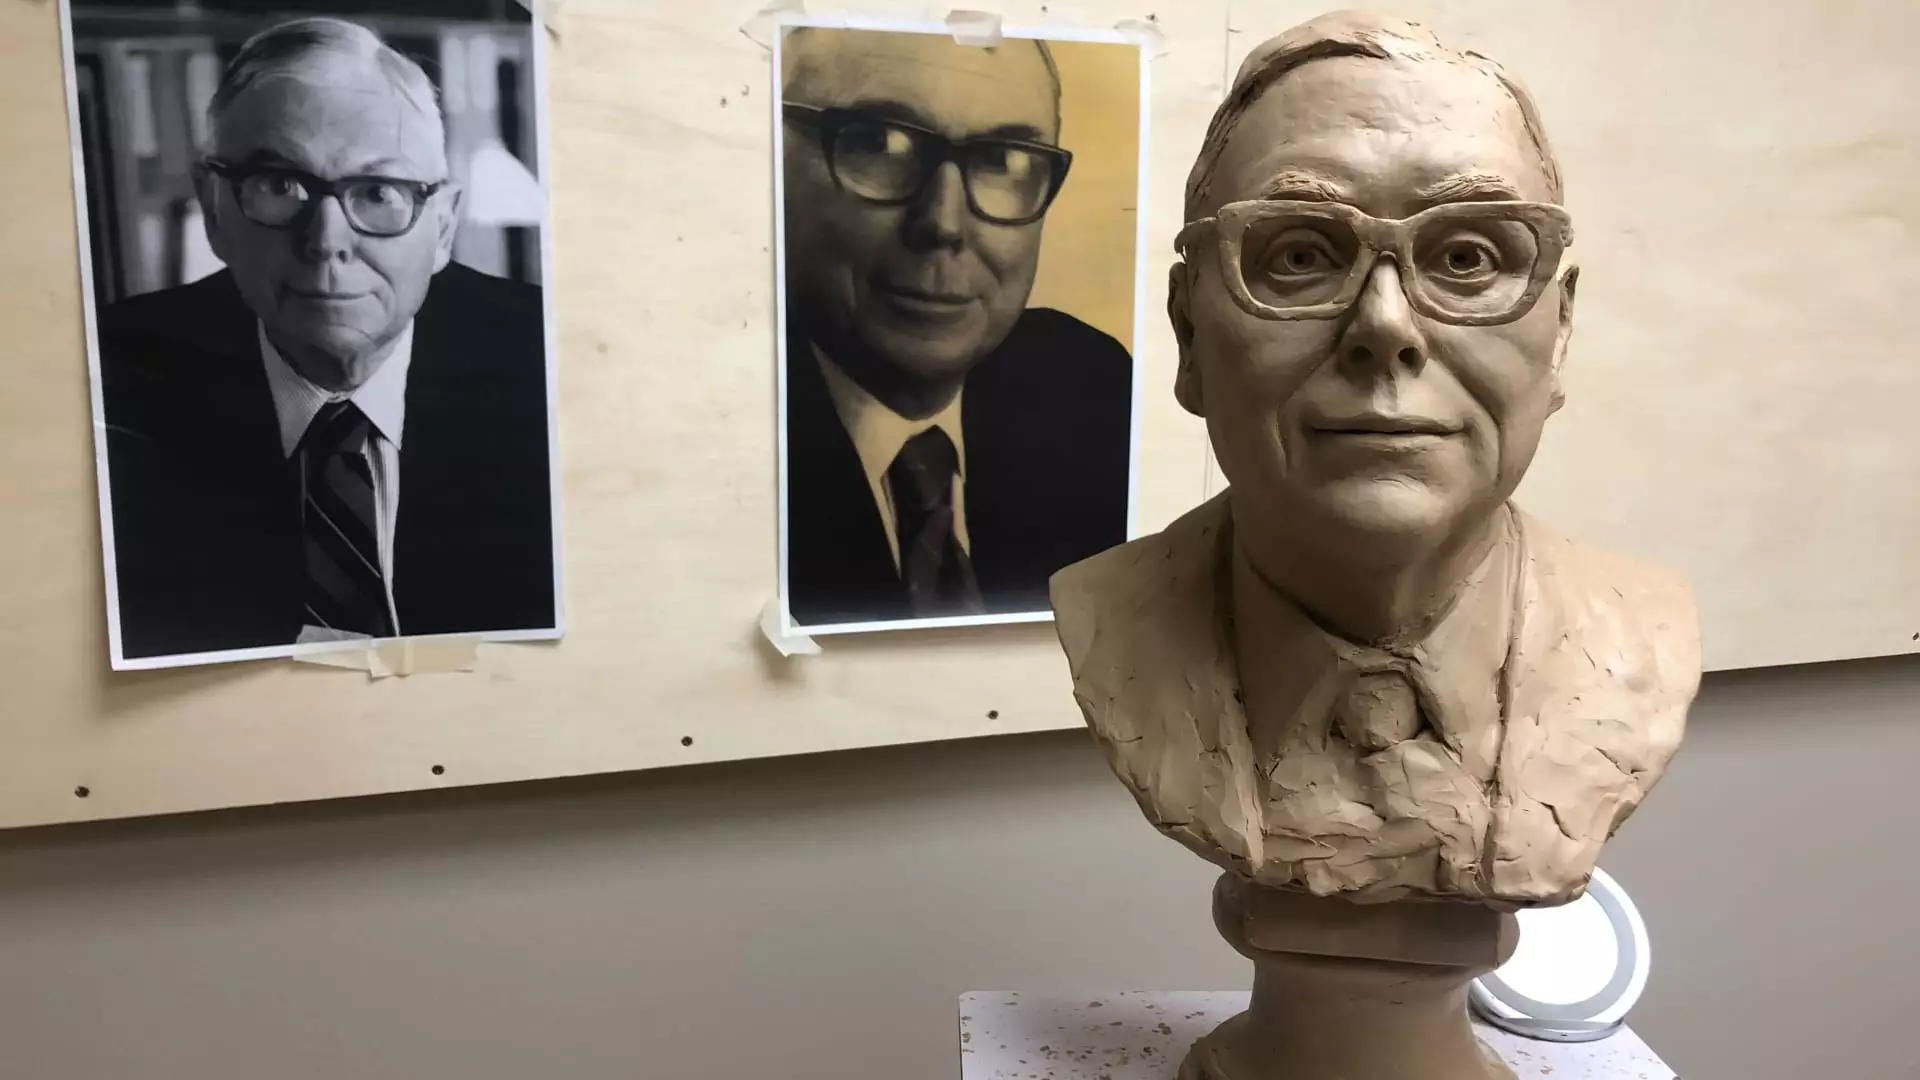 Celebrating Charlie Munger: A Tribute through Sculpture